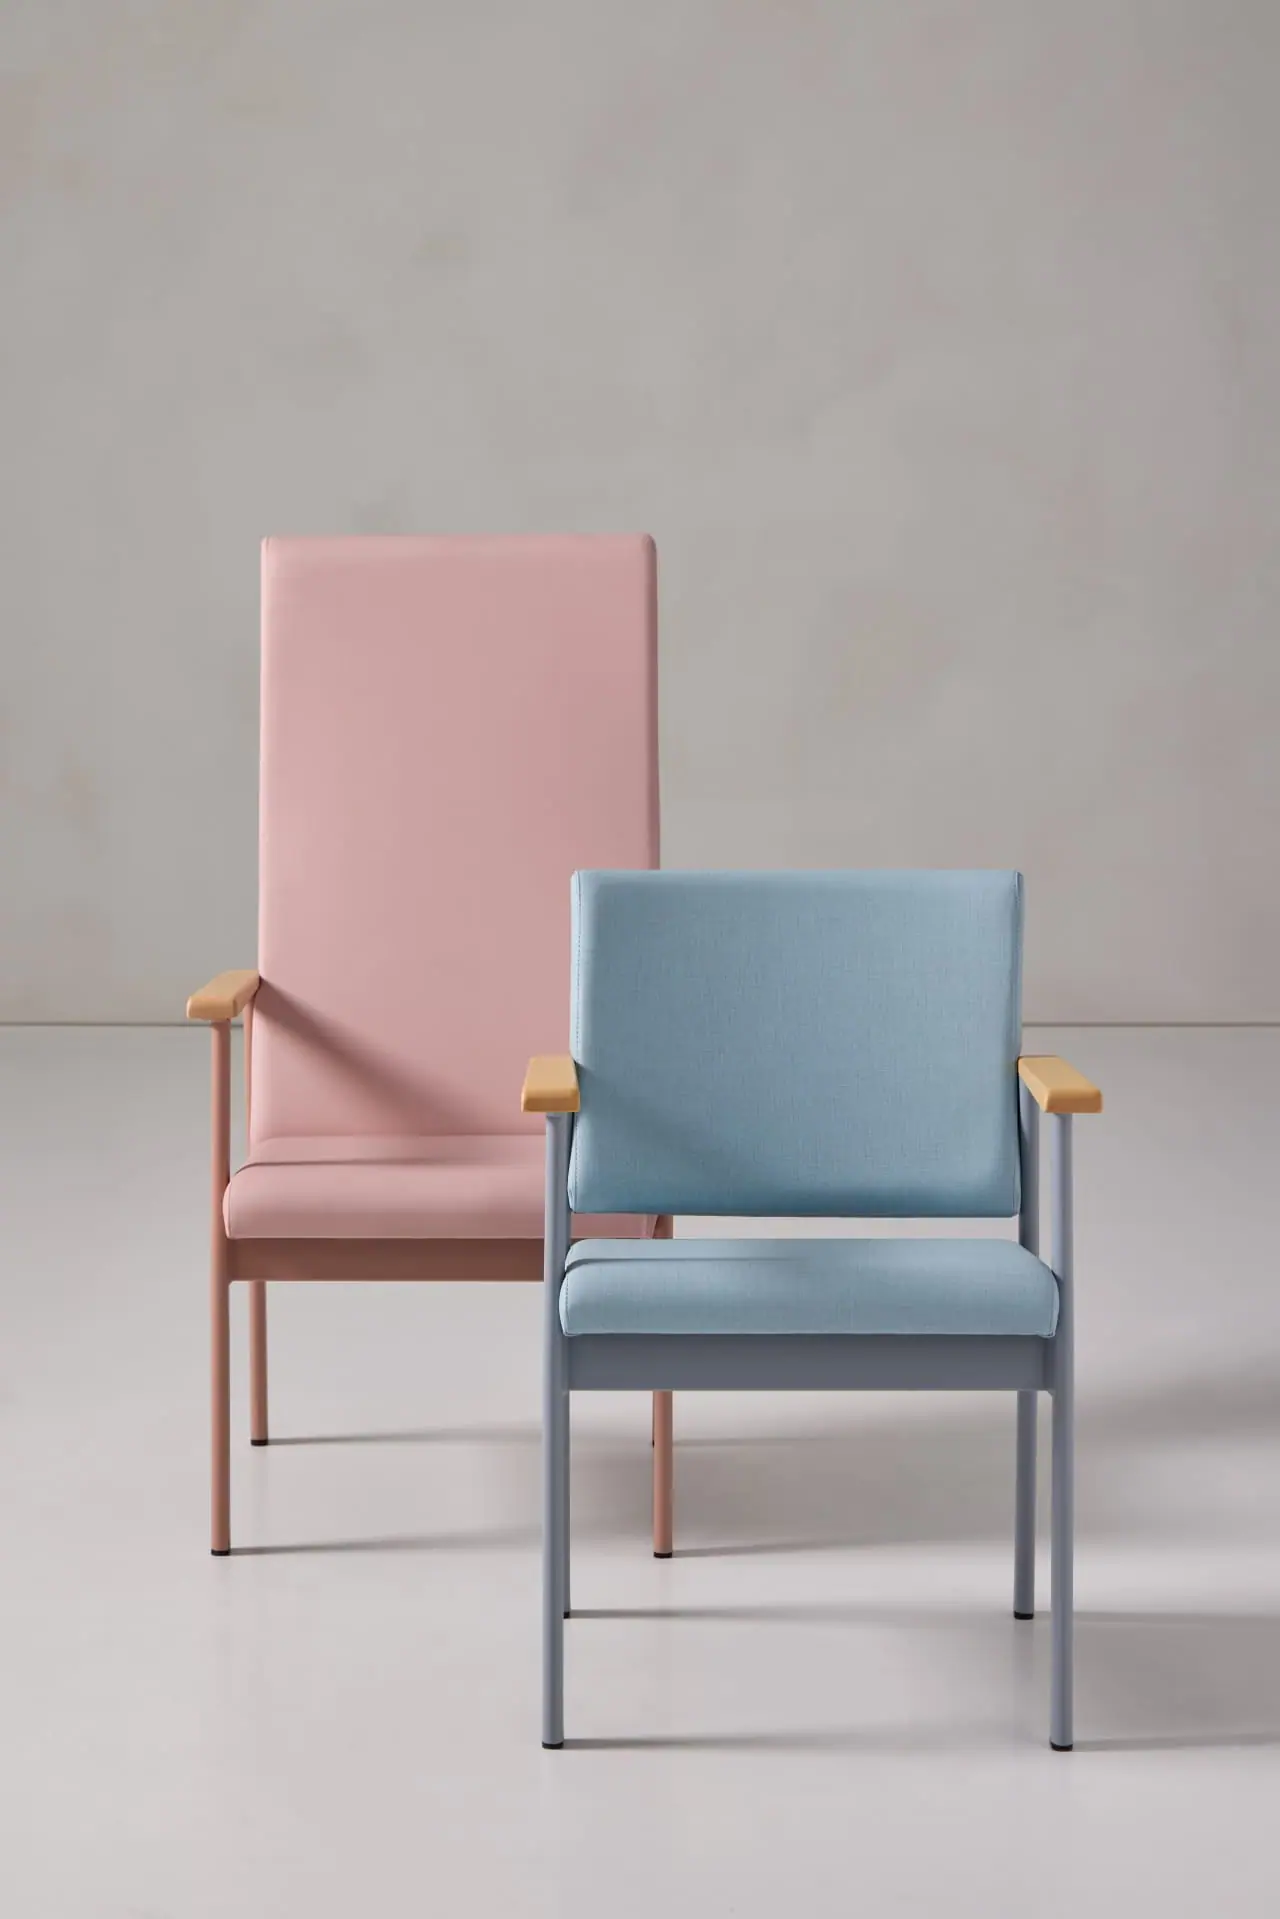 seniorcare-rodas-chairs-and-armchairs-01